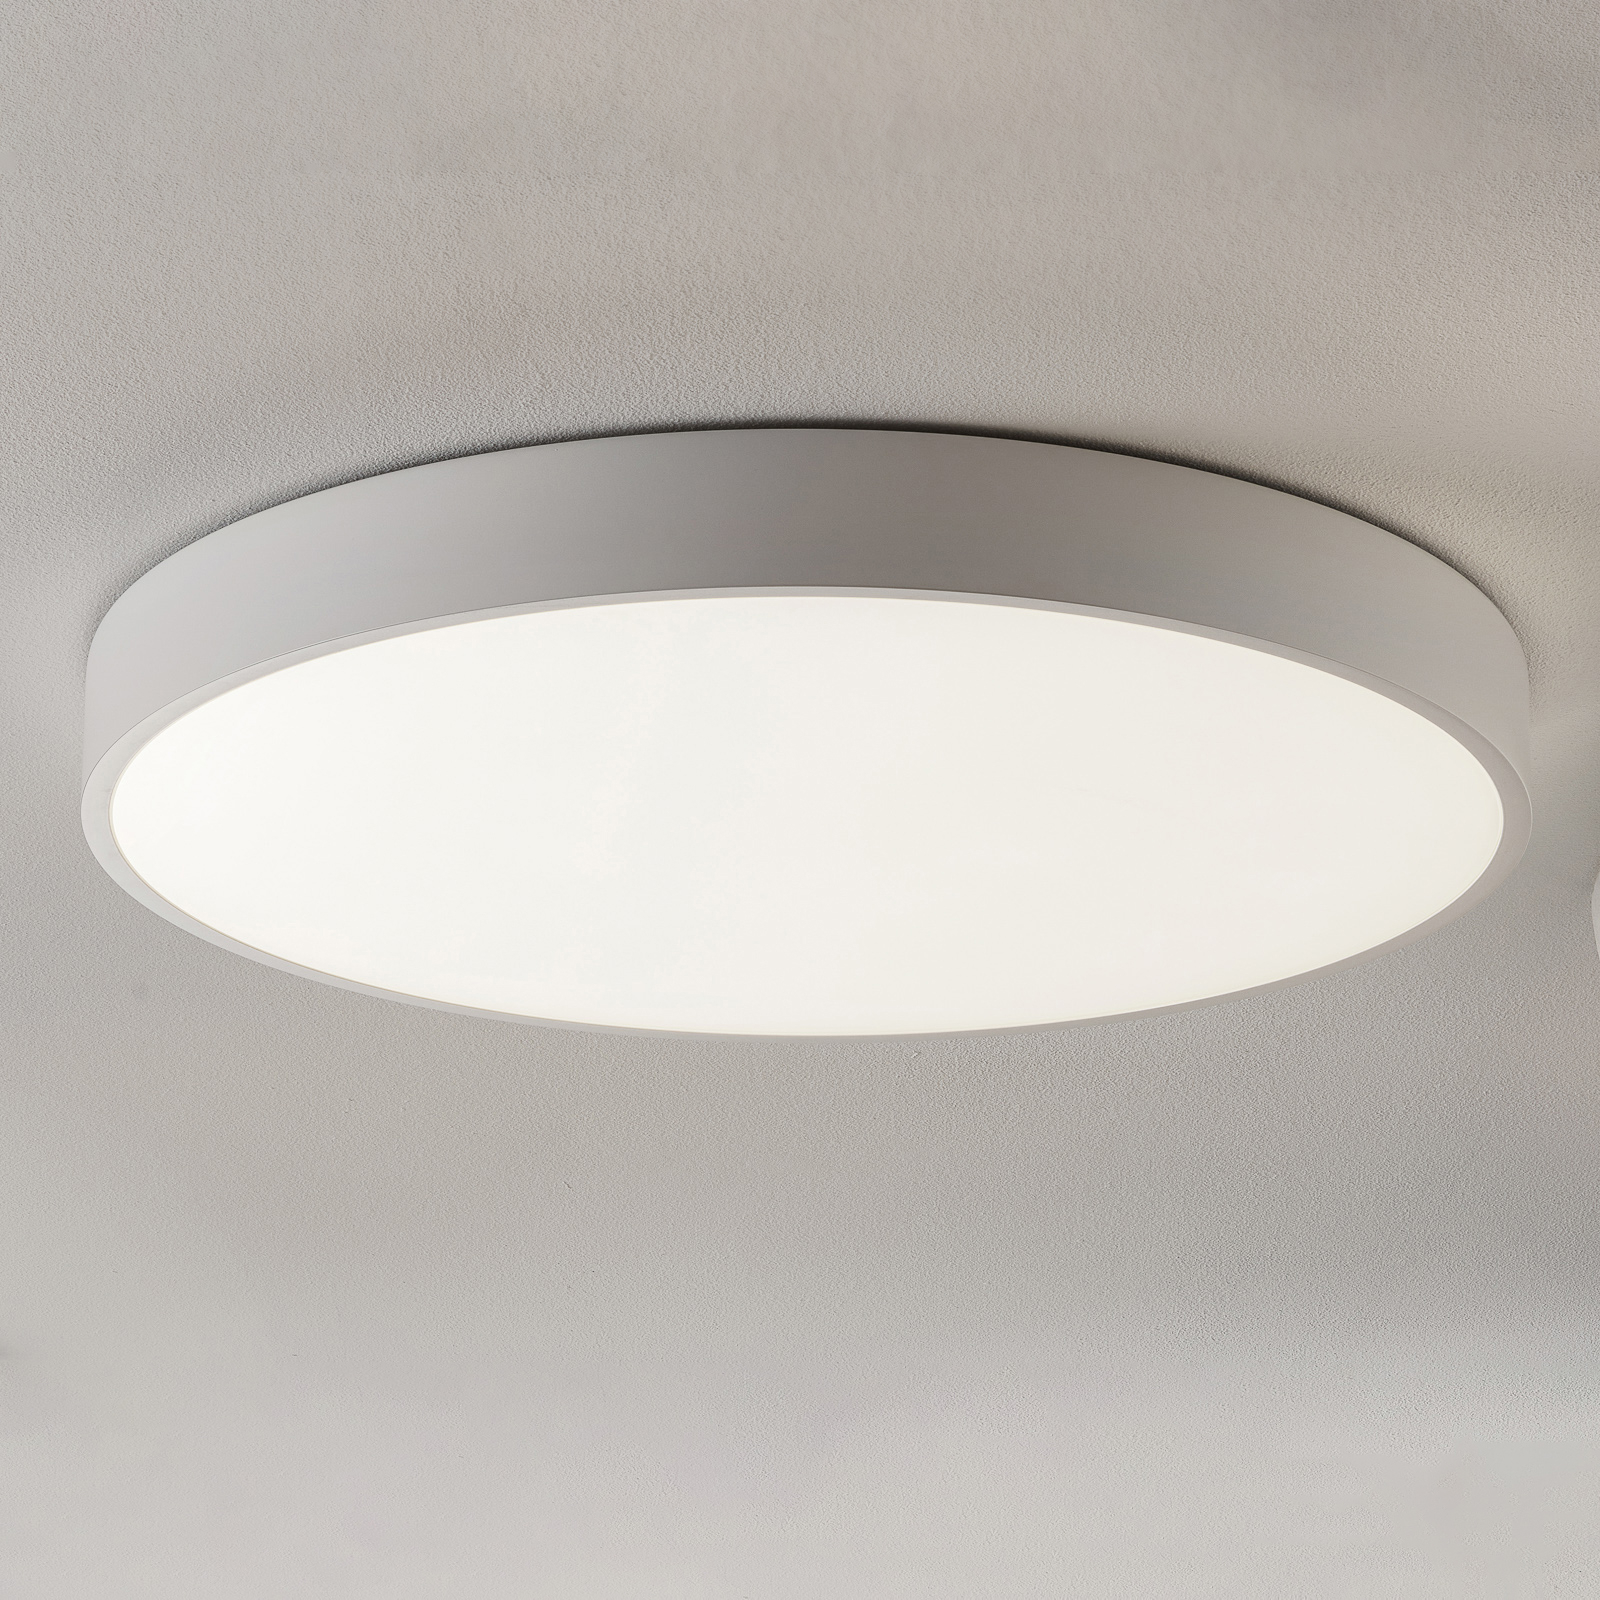 BEGA Planeta ceiling lamp DALI 3,000K white Ø 75cm